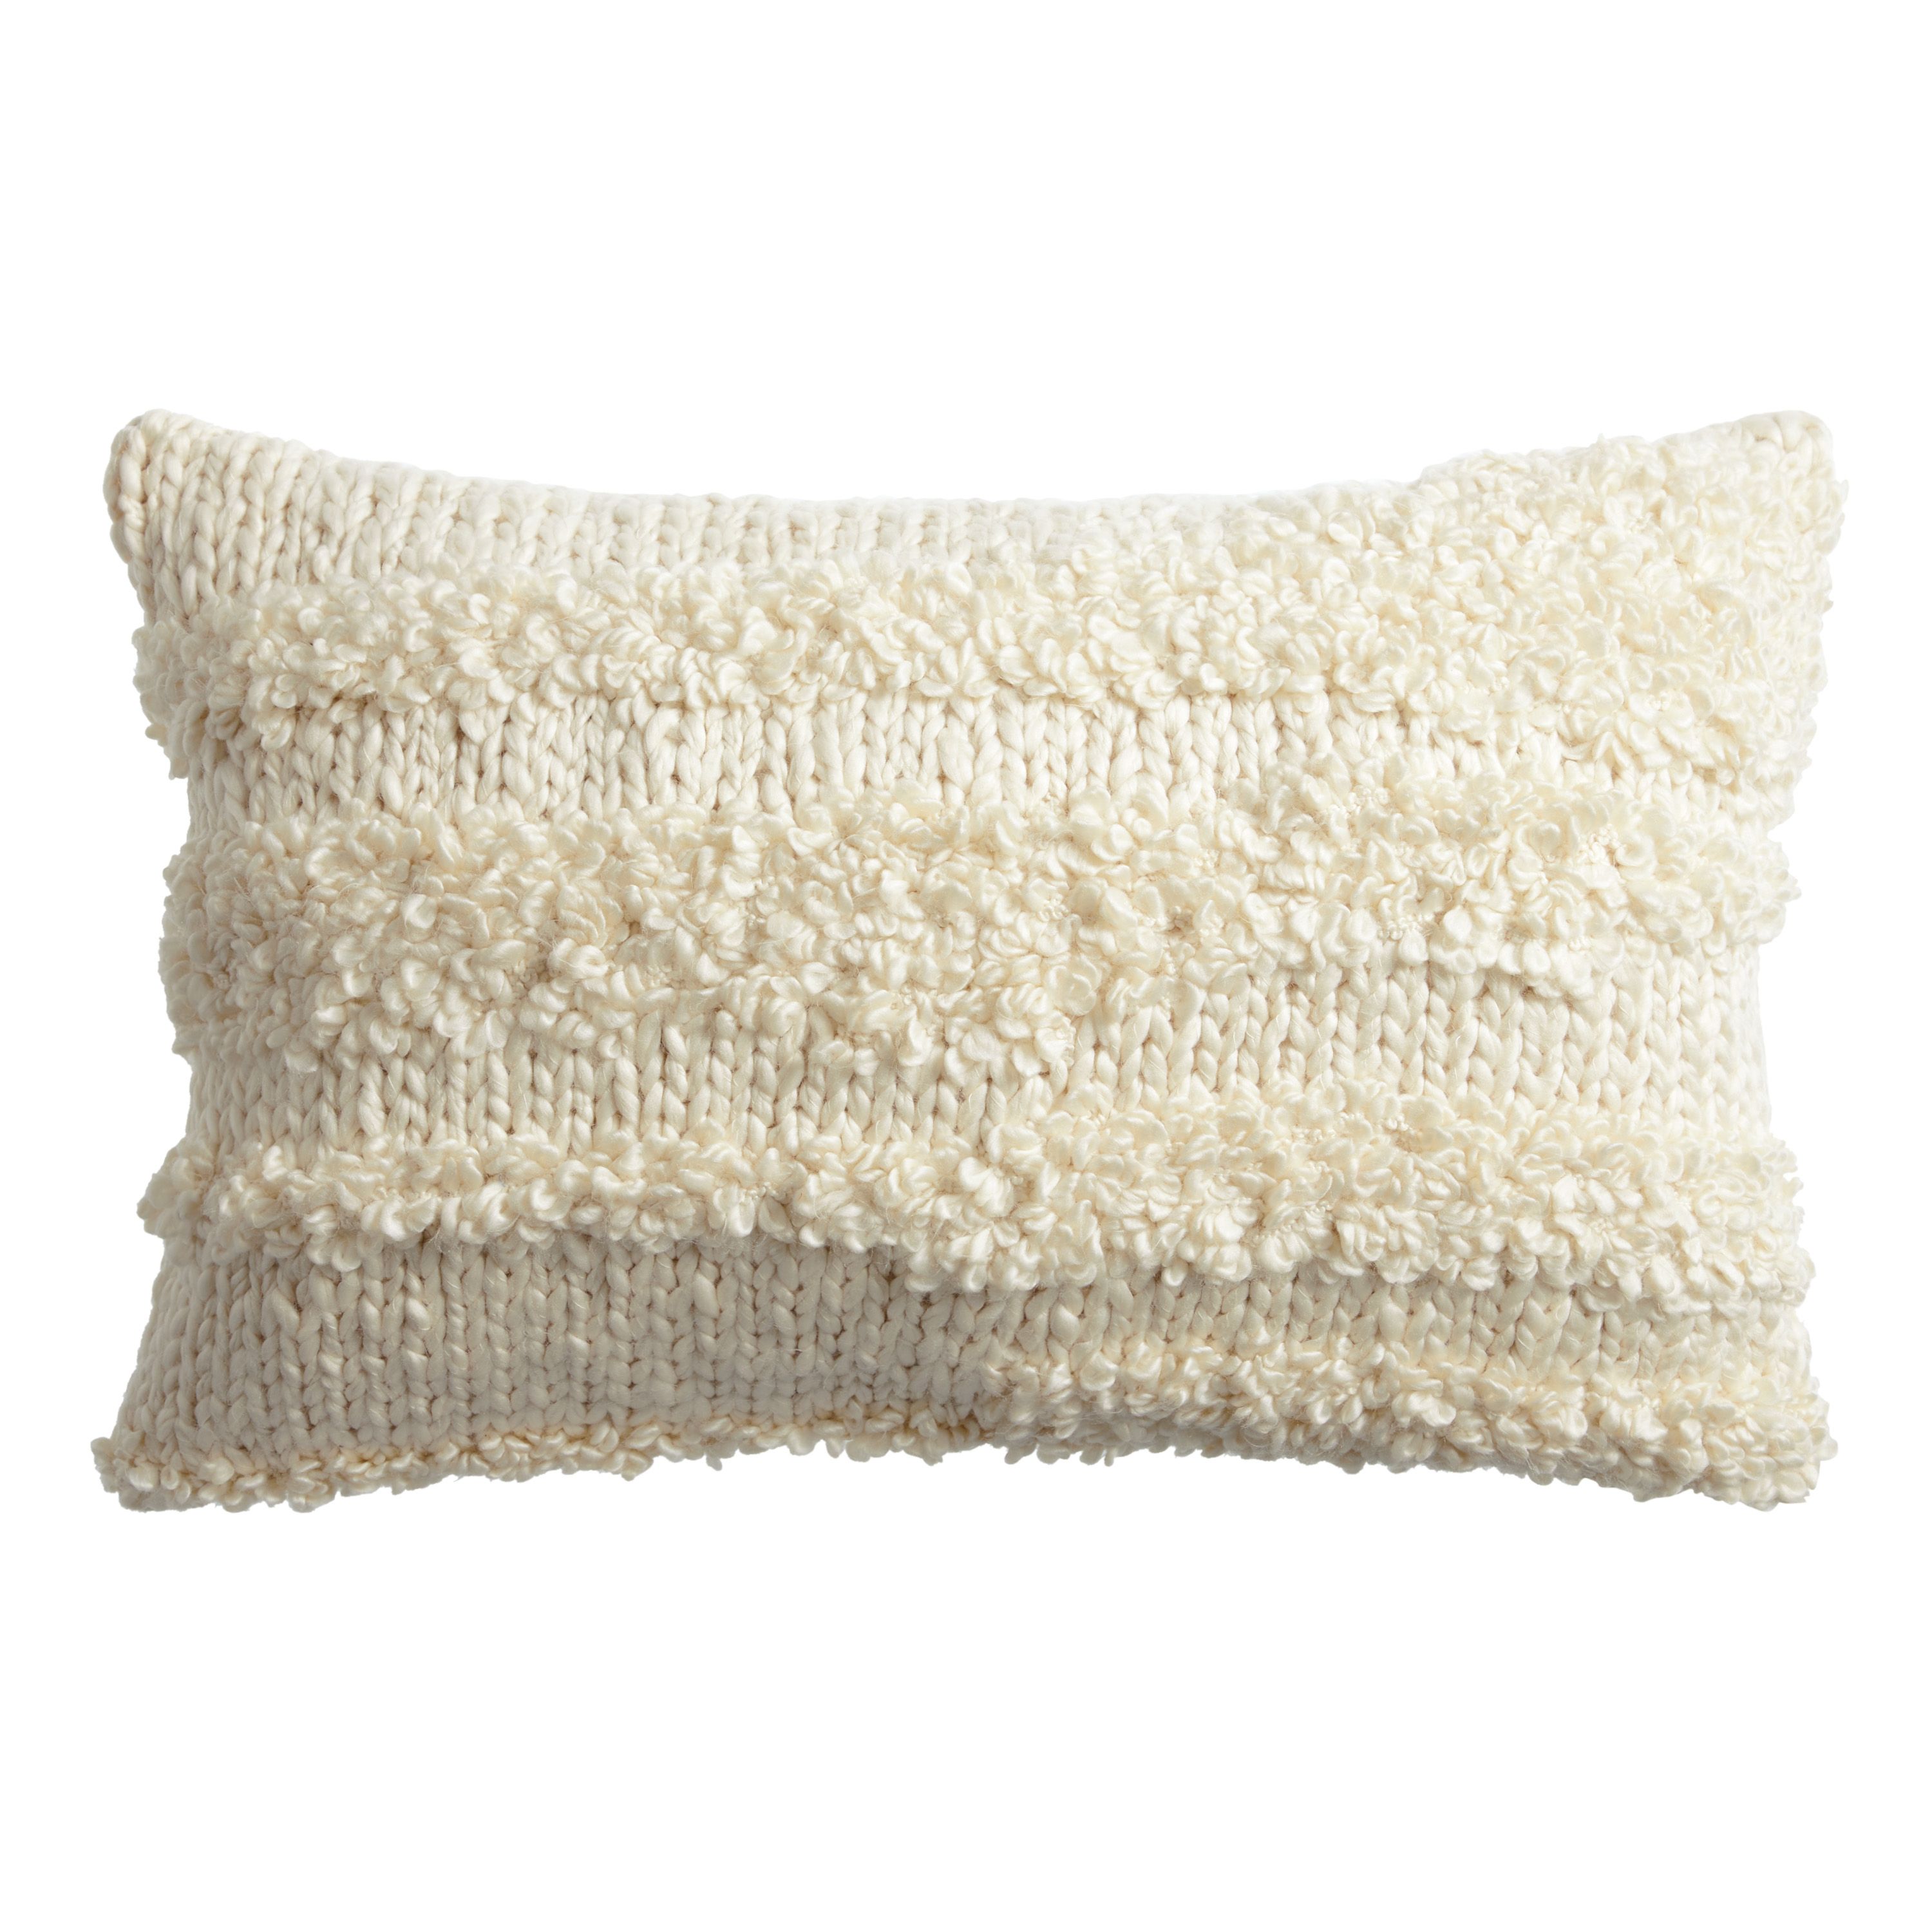 Ivory Hand Knit Popcorn Lumbar Pillow - World Market | World Market